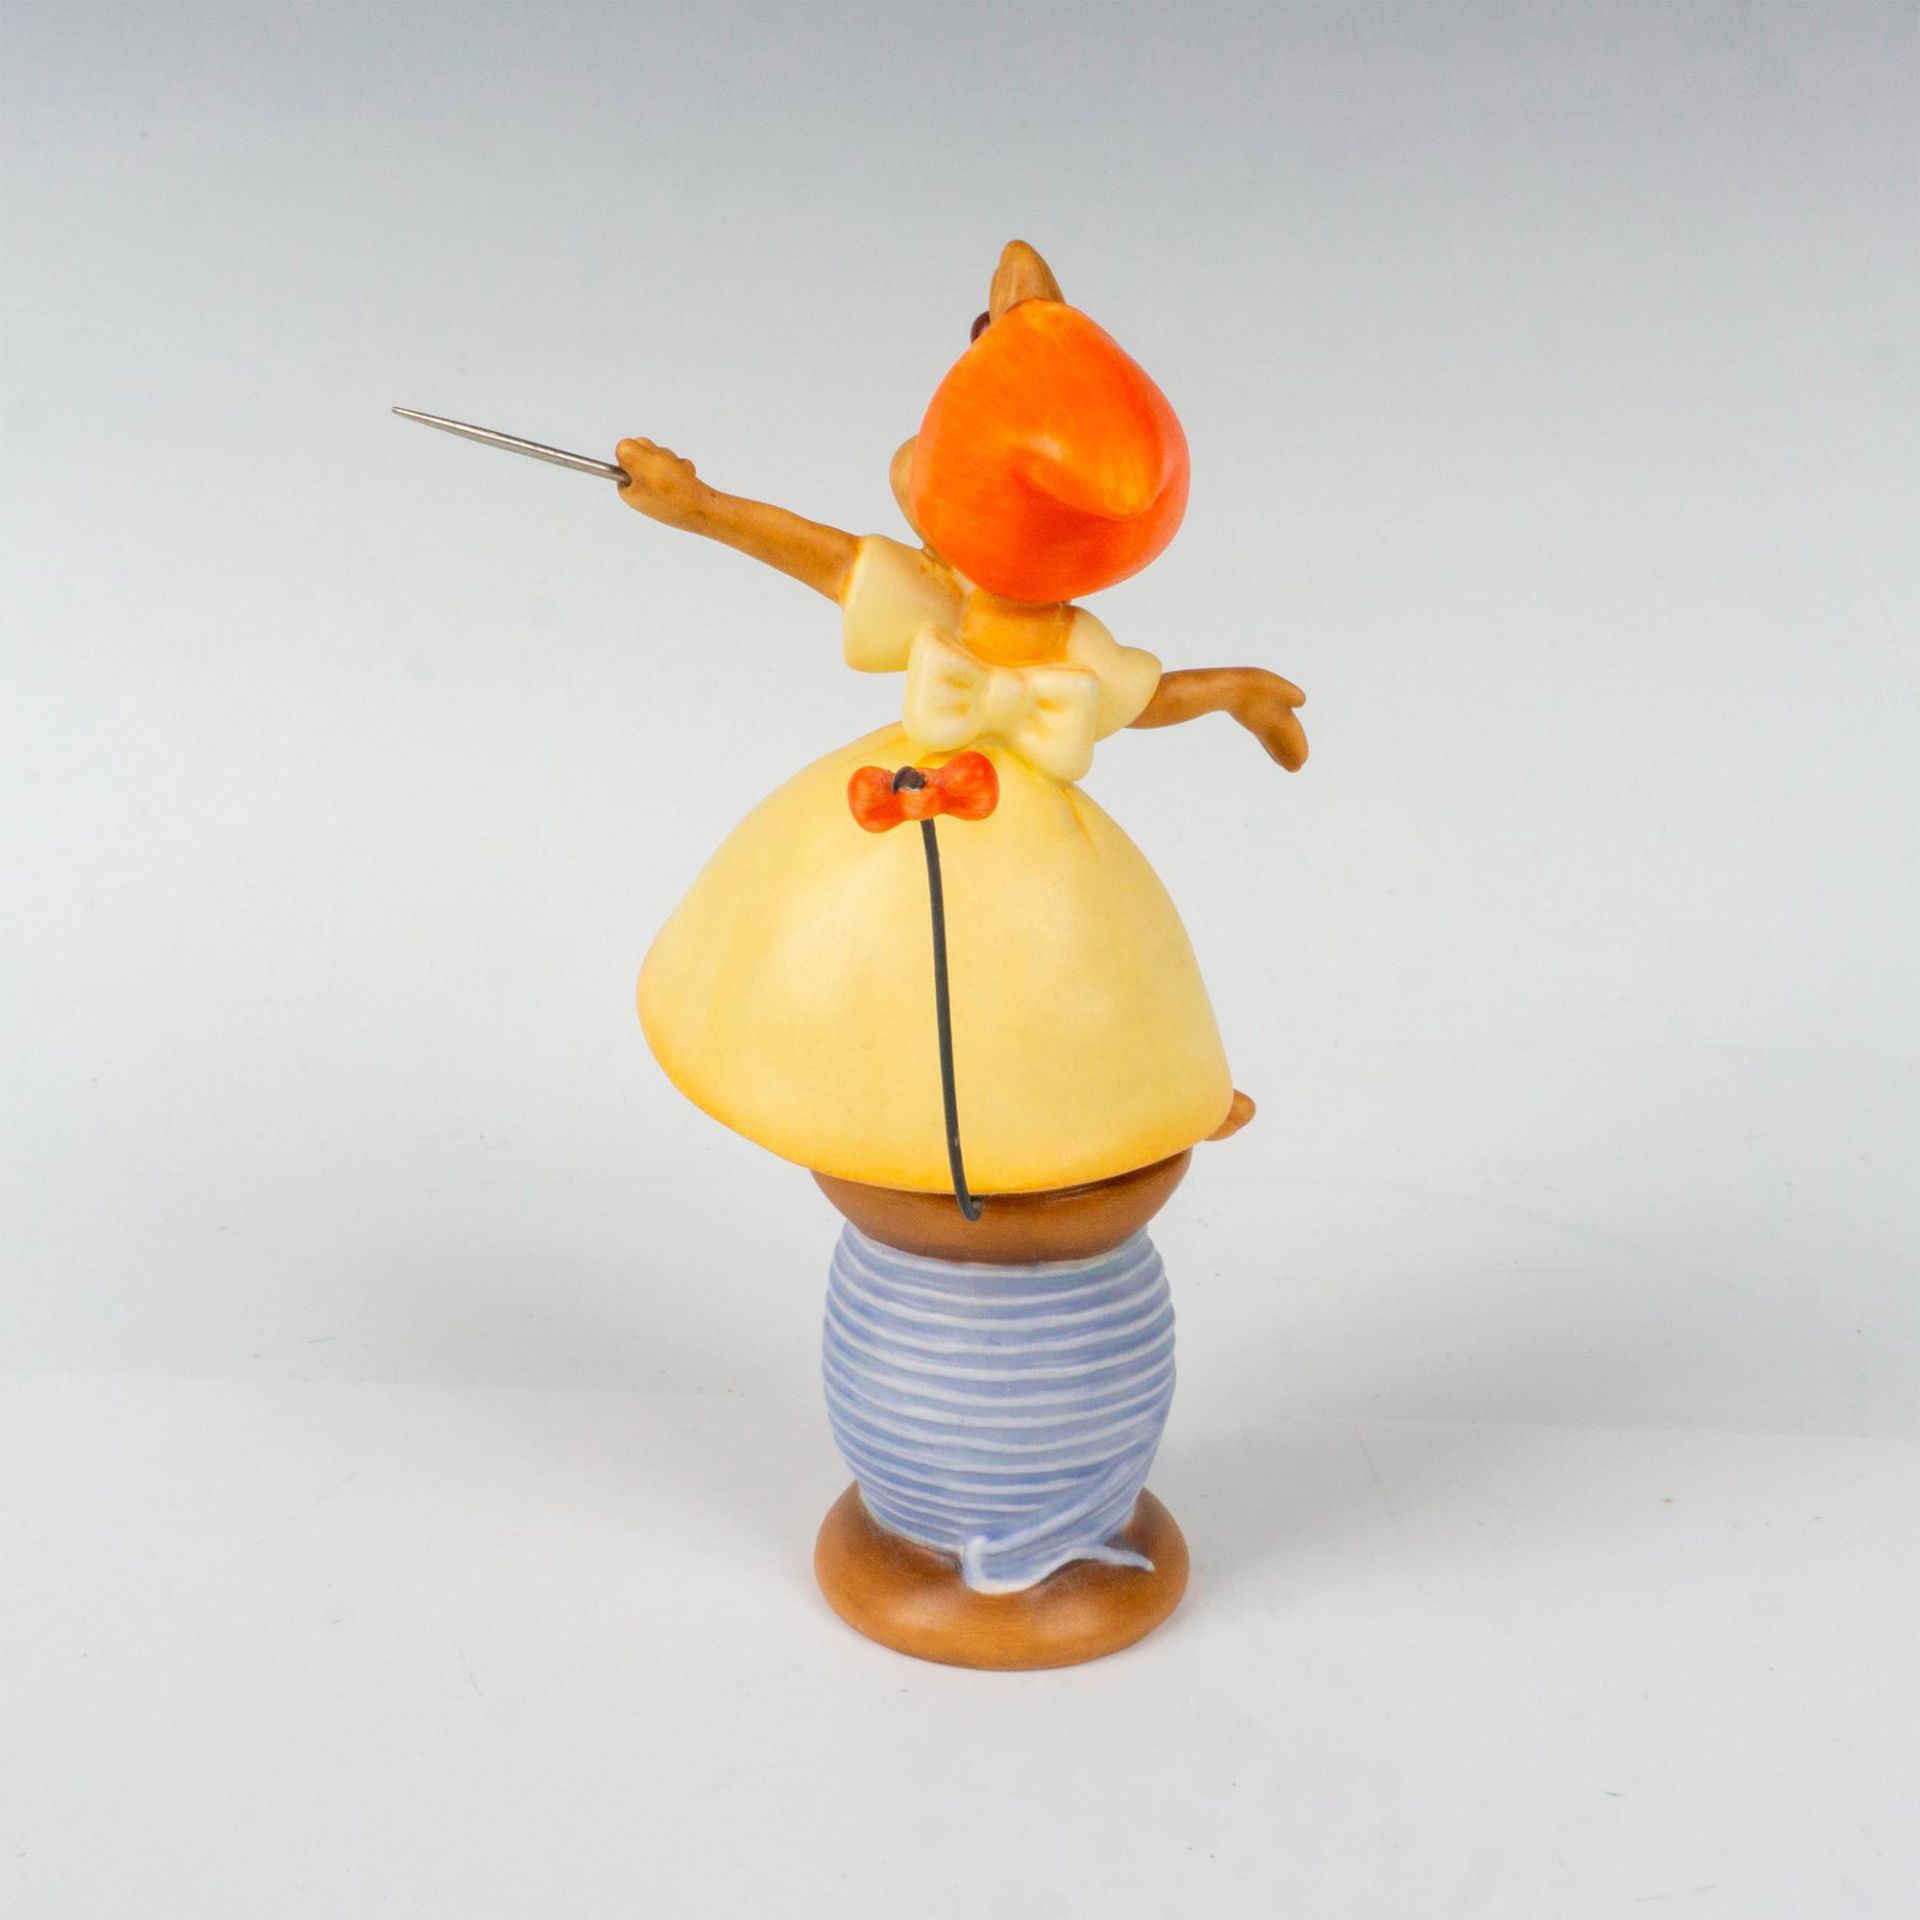 Walt Disney Classics Collection Figurine, Needle Mouse - Image 2 of 4